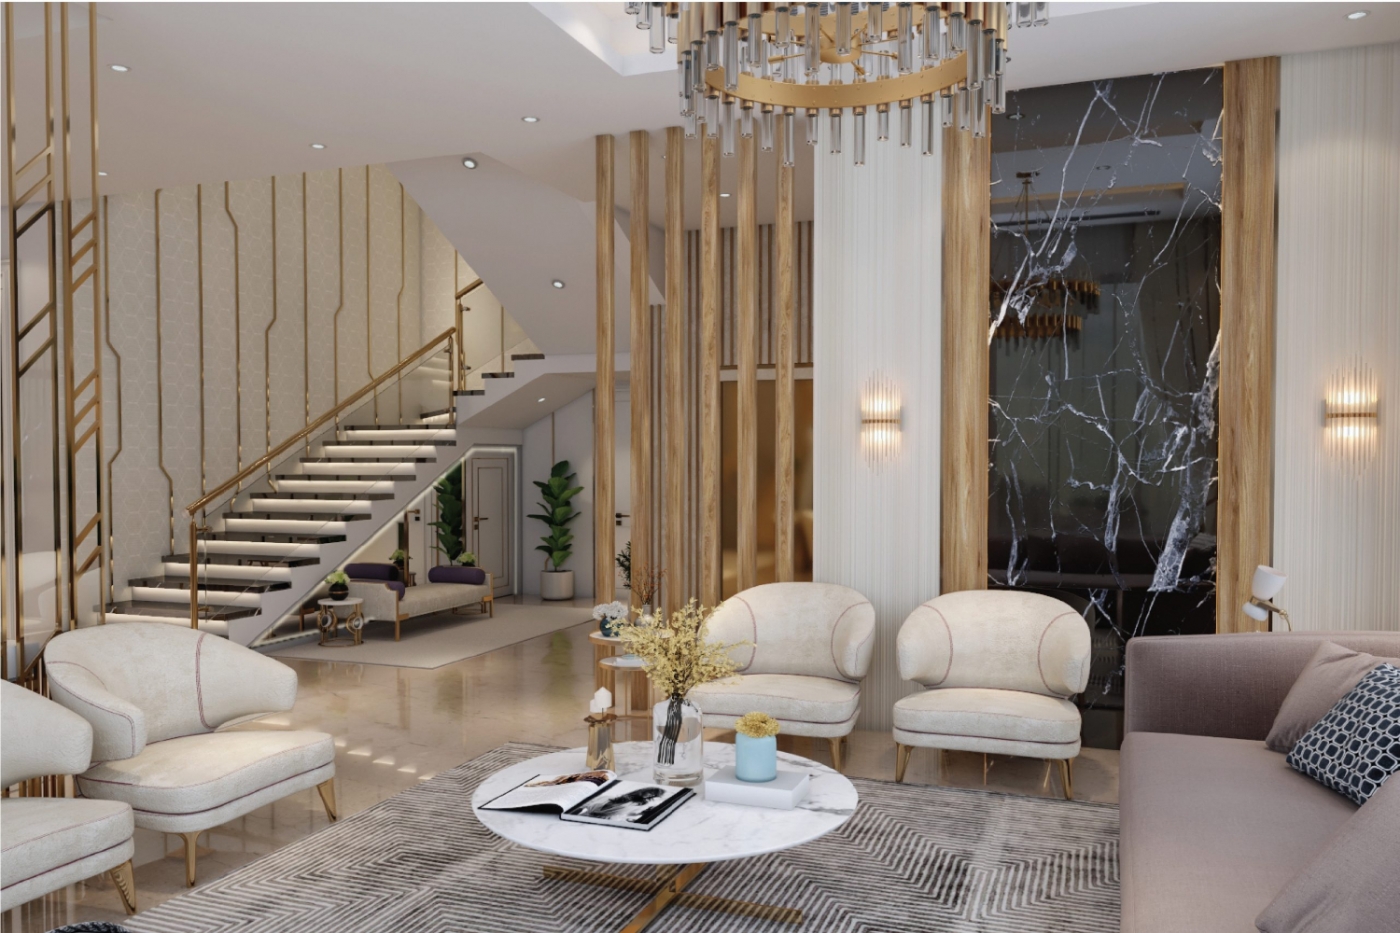 elegant living room riyadh luxury home decor art deco design feature image